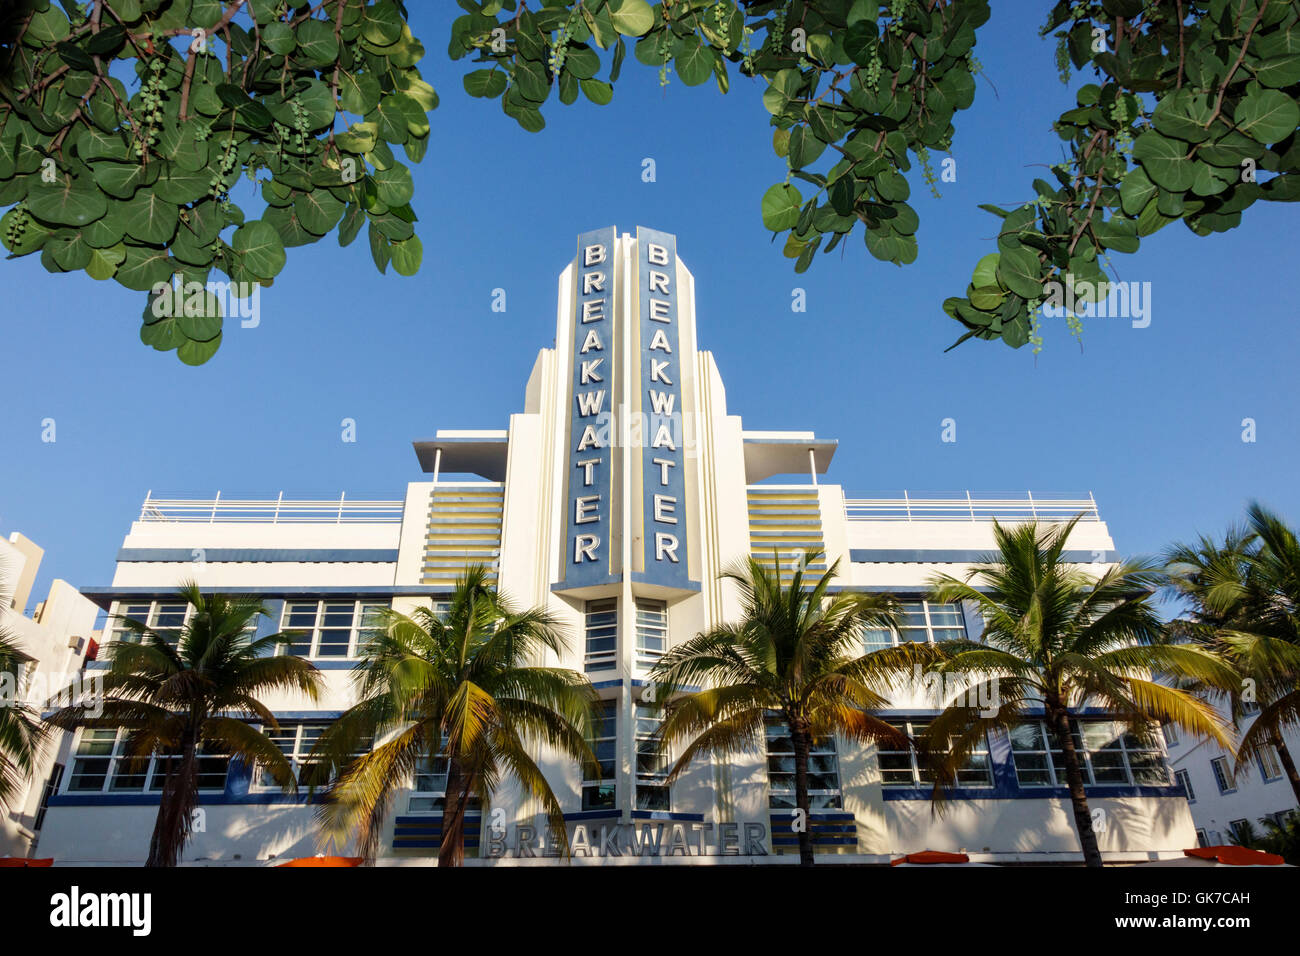 Miami Beach Florida, South Beach, Ocean Drive, tropische Deko, Breakwater Hotel, 1936, Fassade, Architektur, Anton Skislewicz, Beschilderung, Schild, Seegrape, Palmen, Baum, F Stockfoto